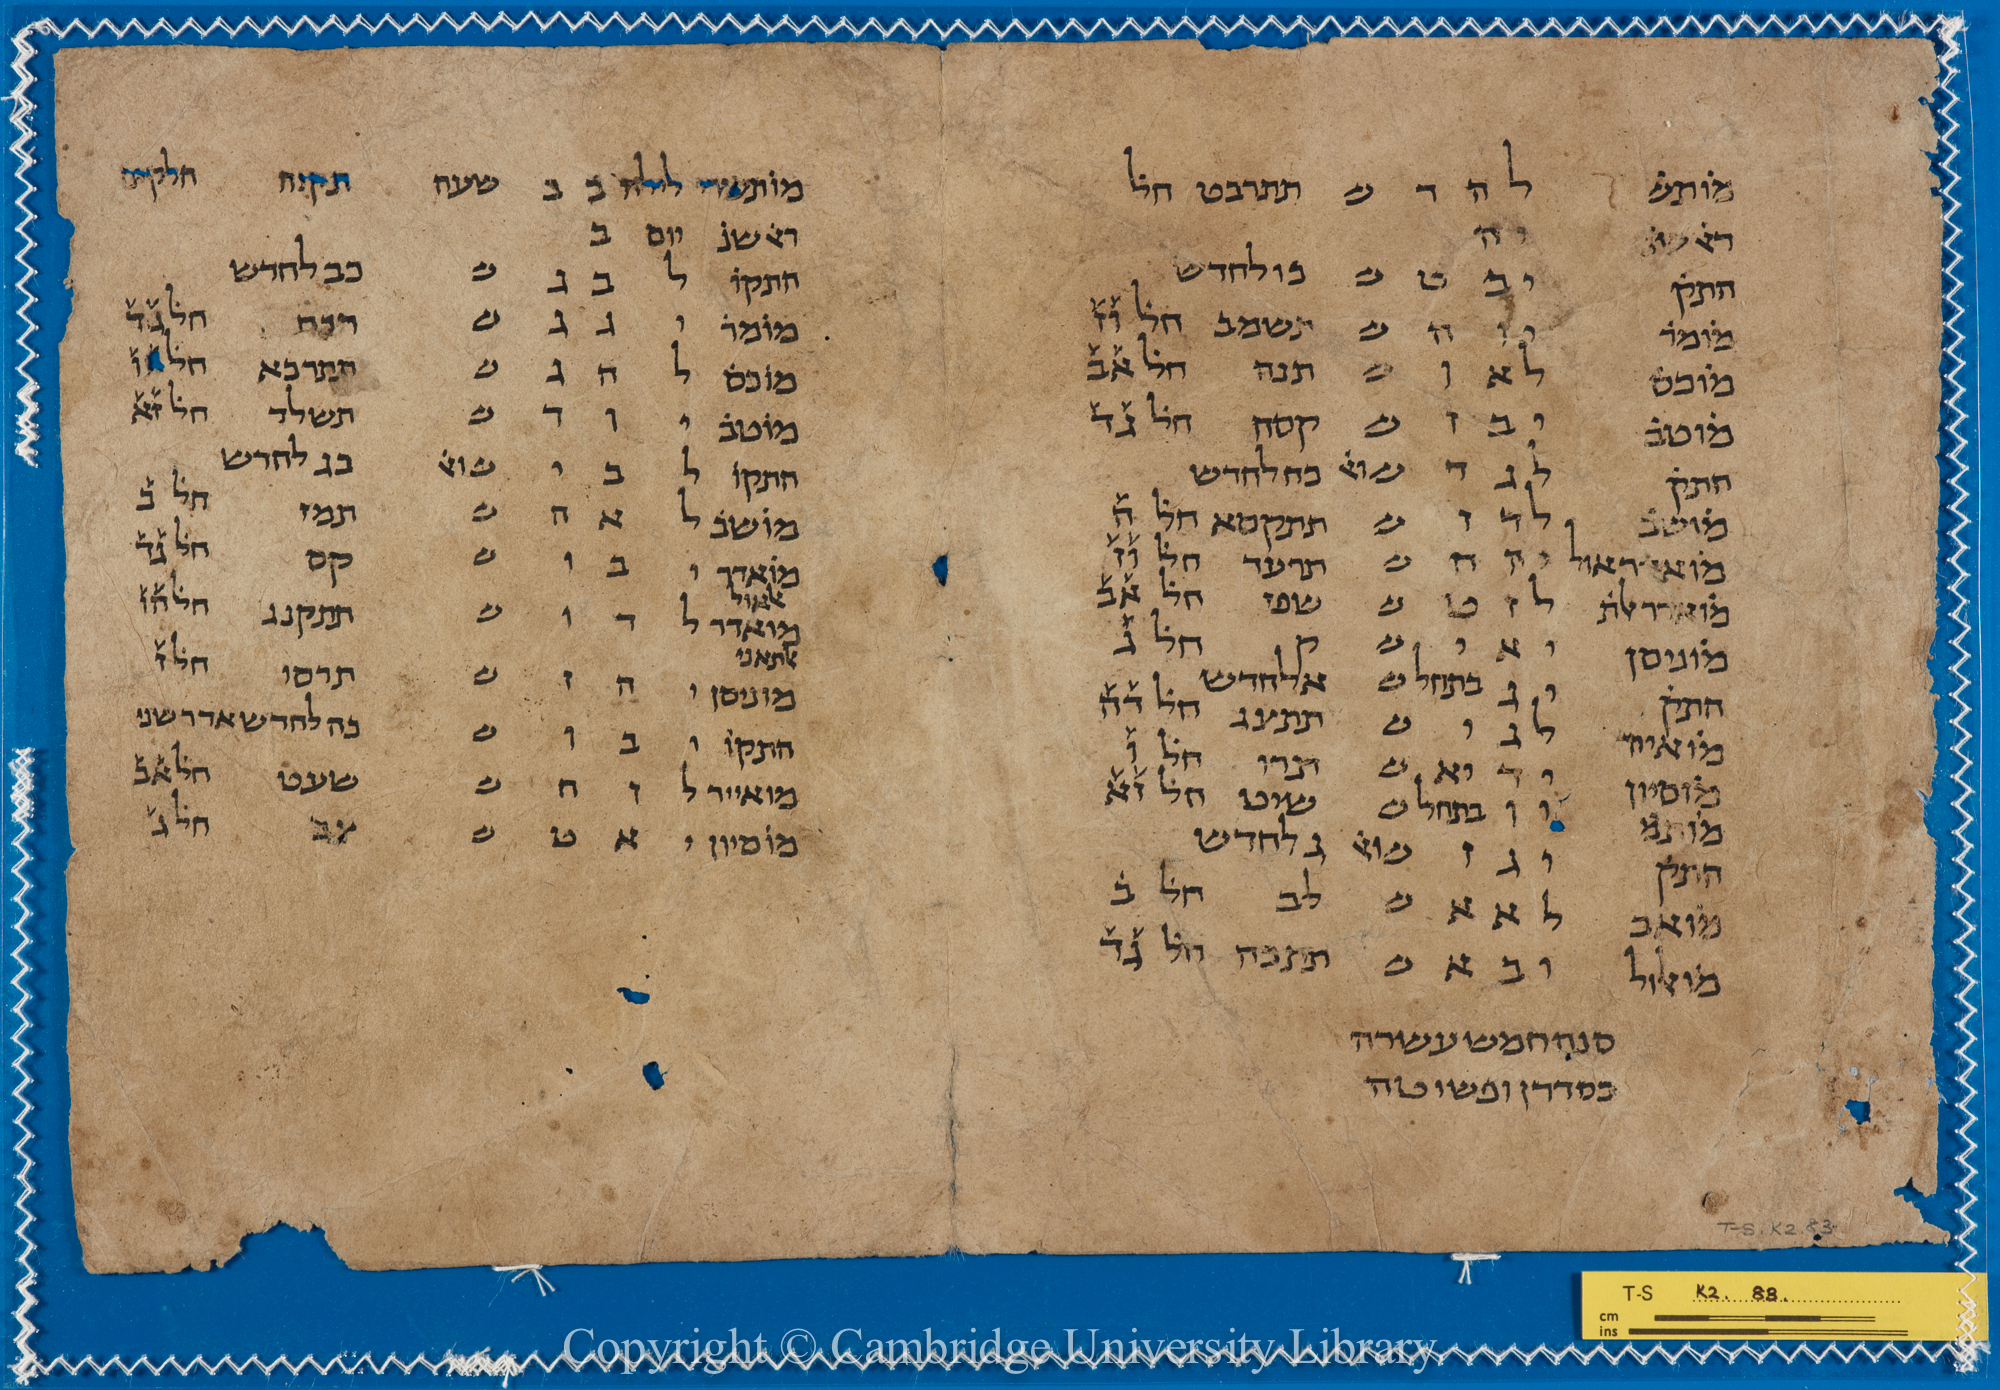 Geniza document showing a calendar